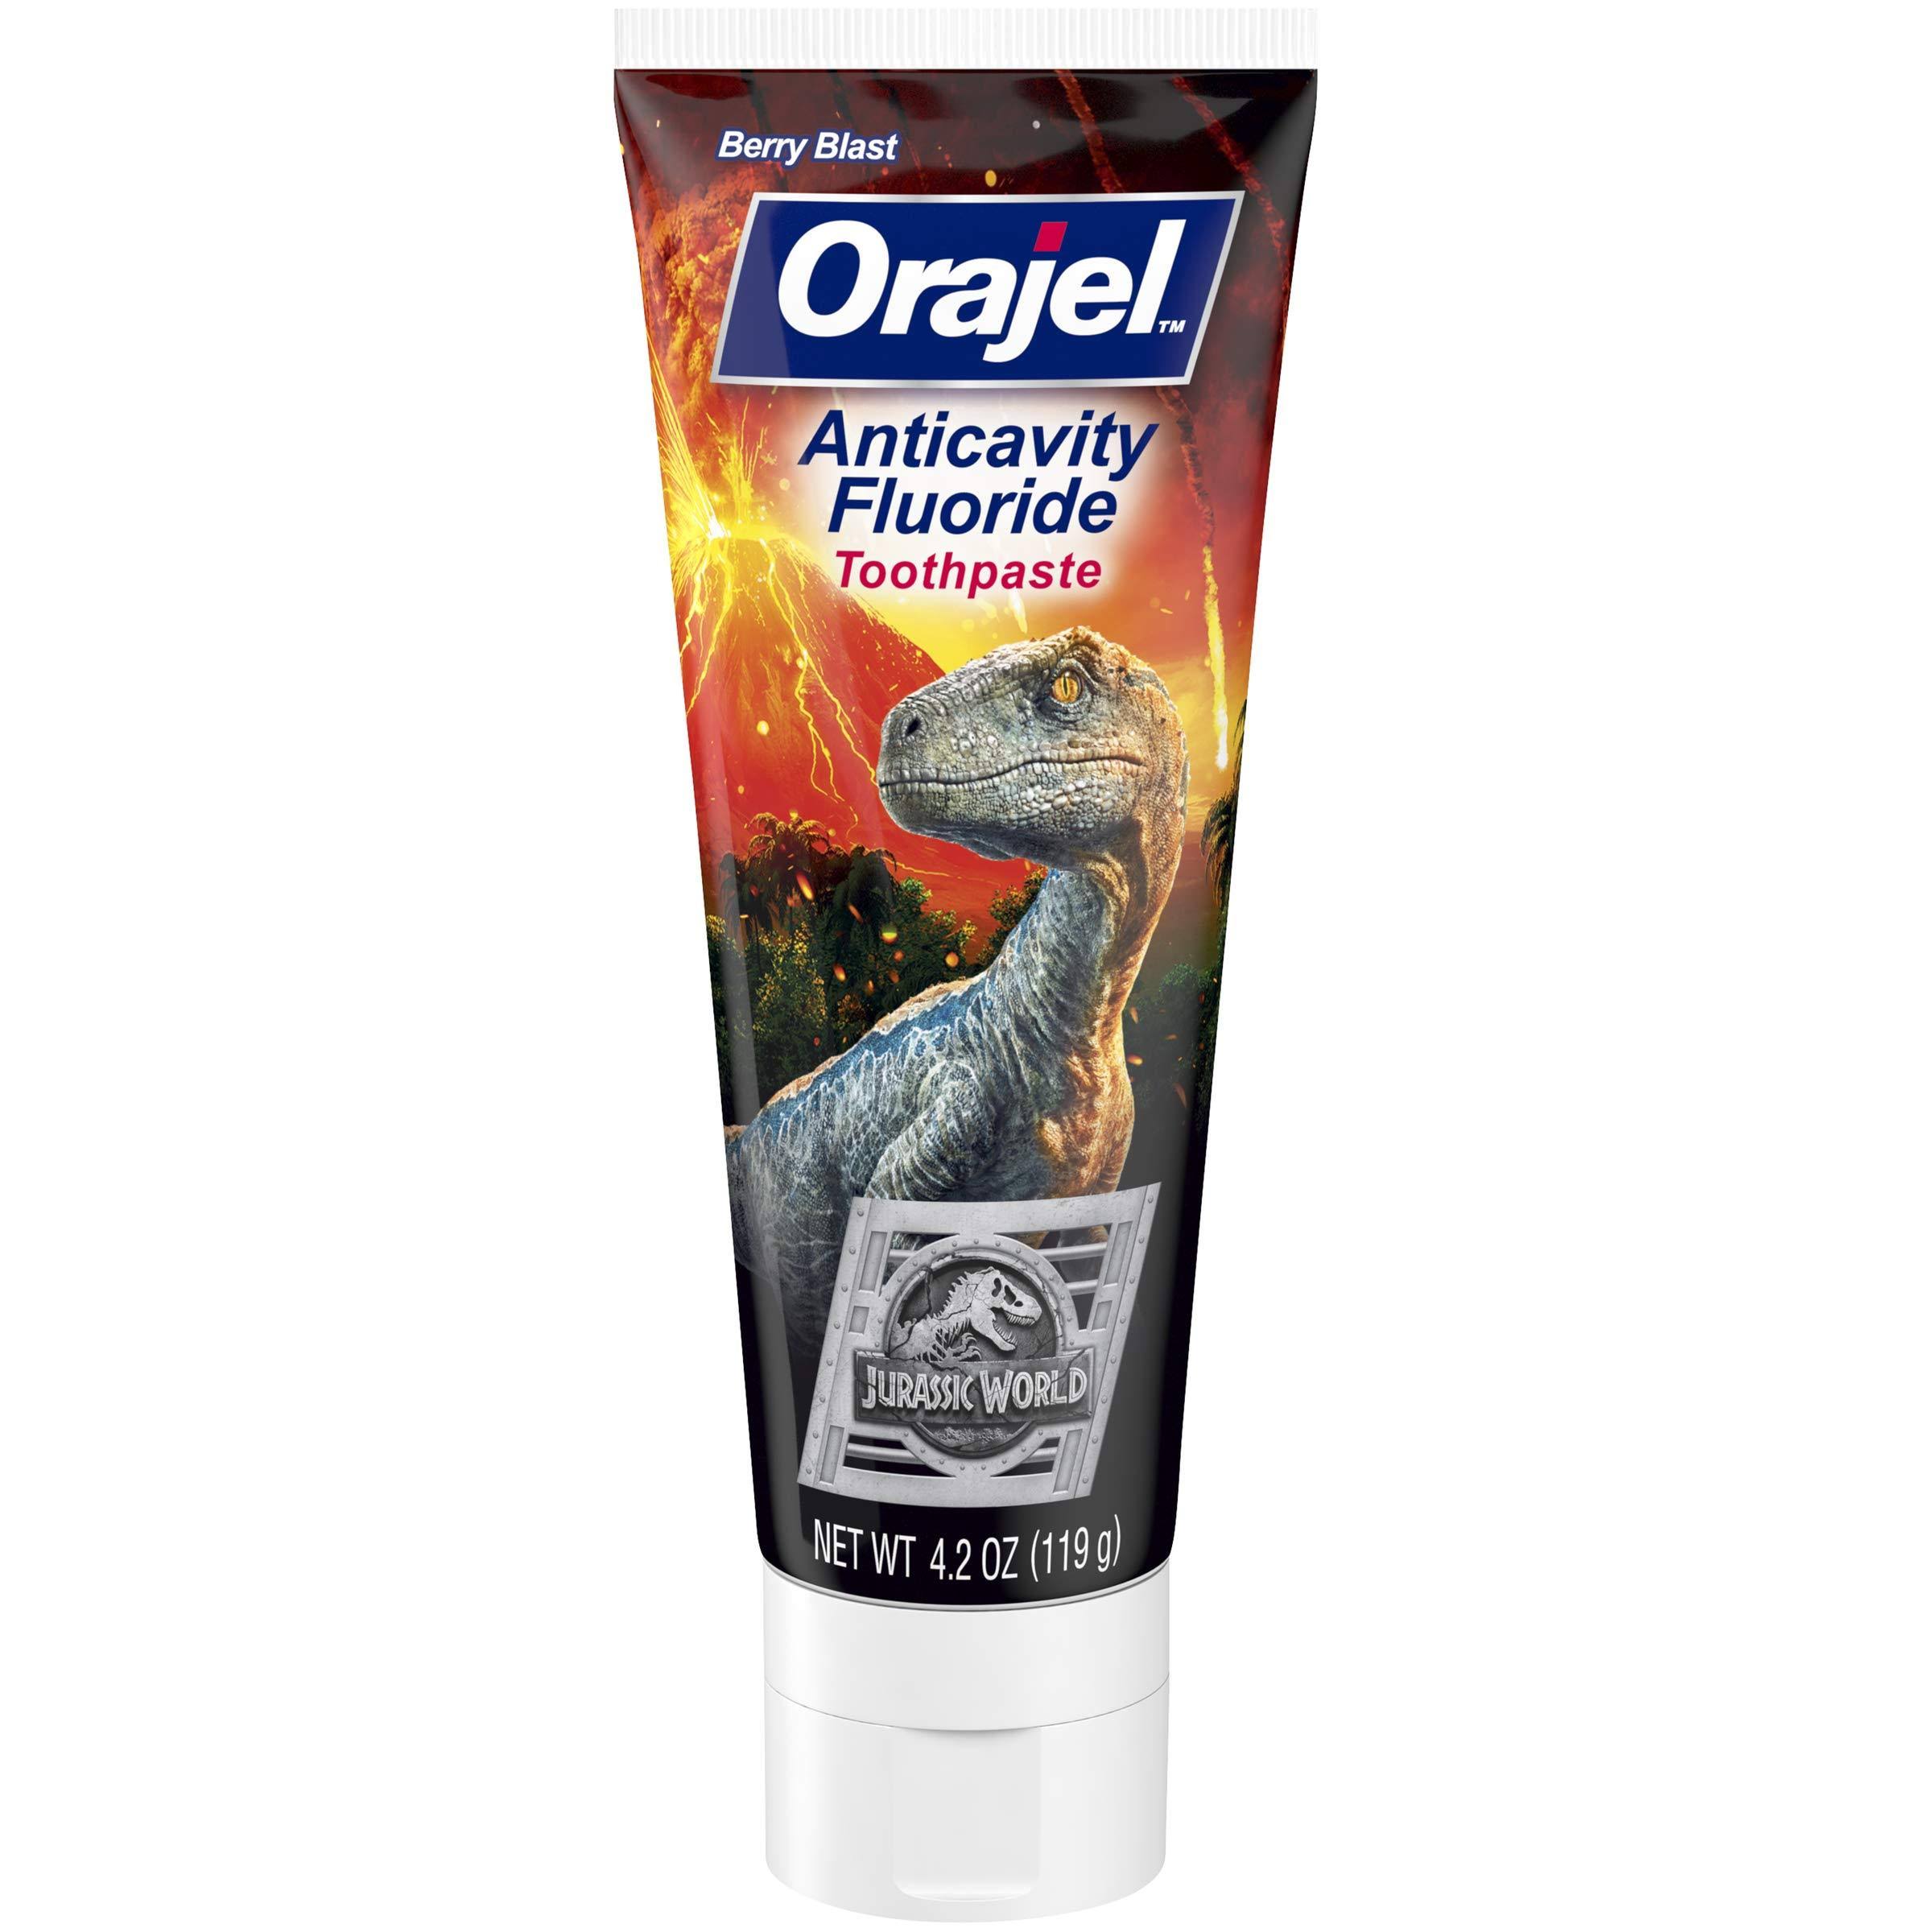 Orajel Jurassic World Anticavity Fluoride Toothpaste, Berry Blast, 4.2oz